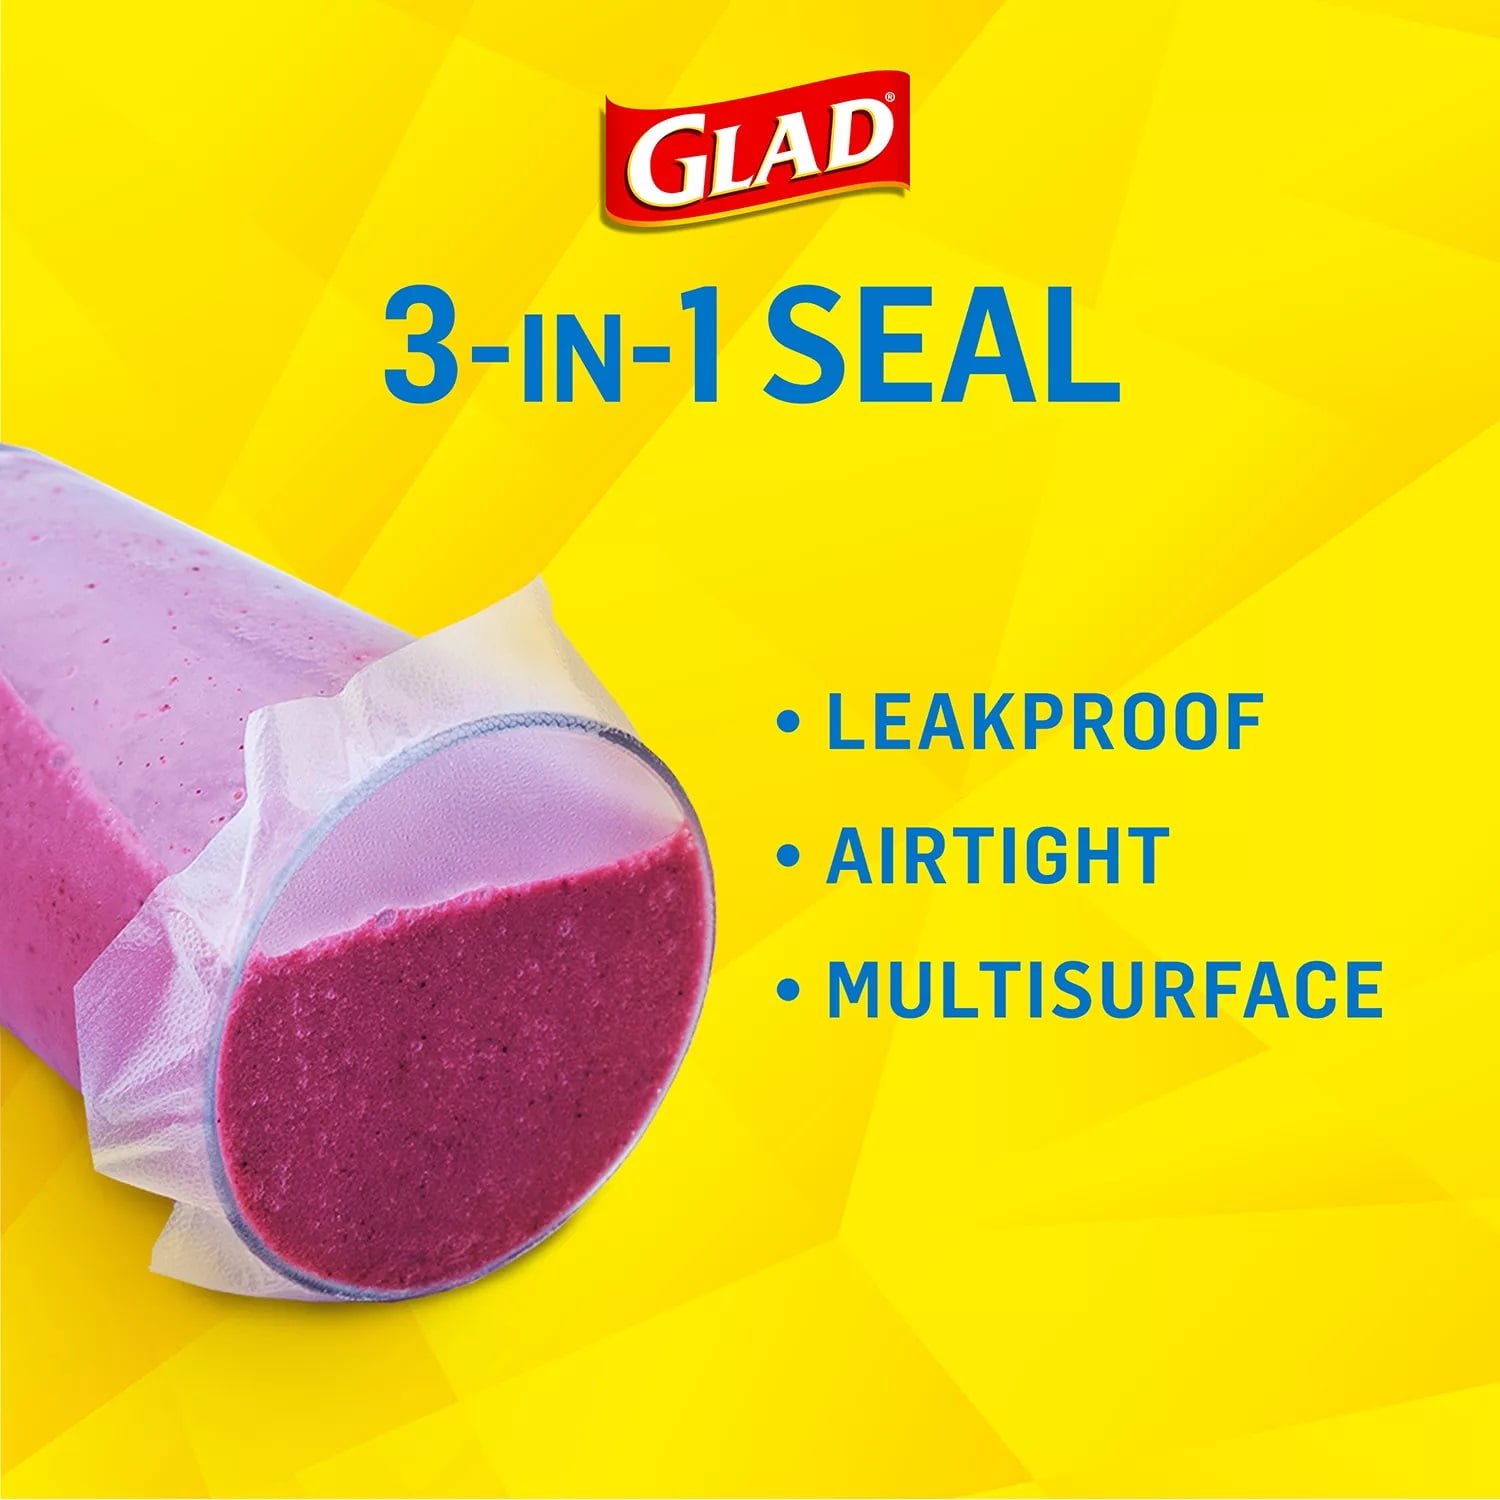 Glad Press'n Seal Food Wrap, 140 sq ft-2 Pack, 1 - Kroger